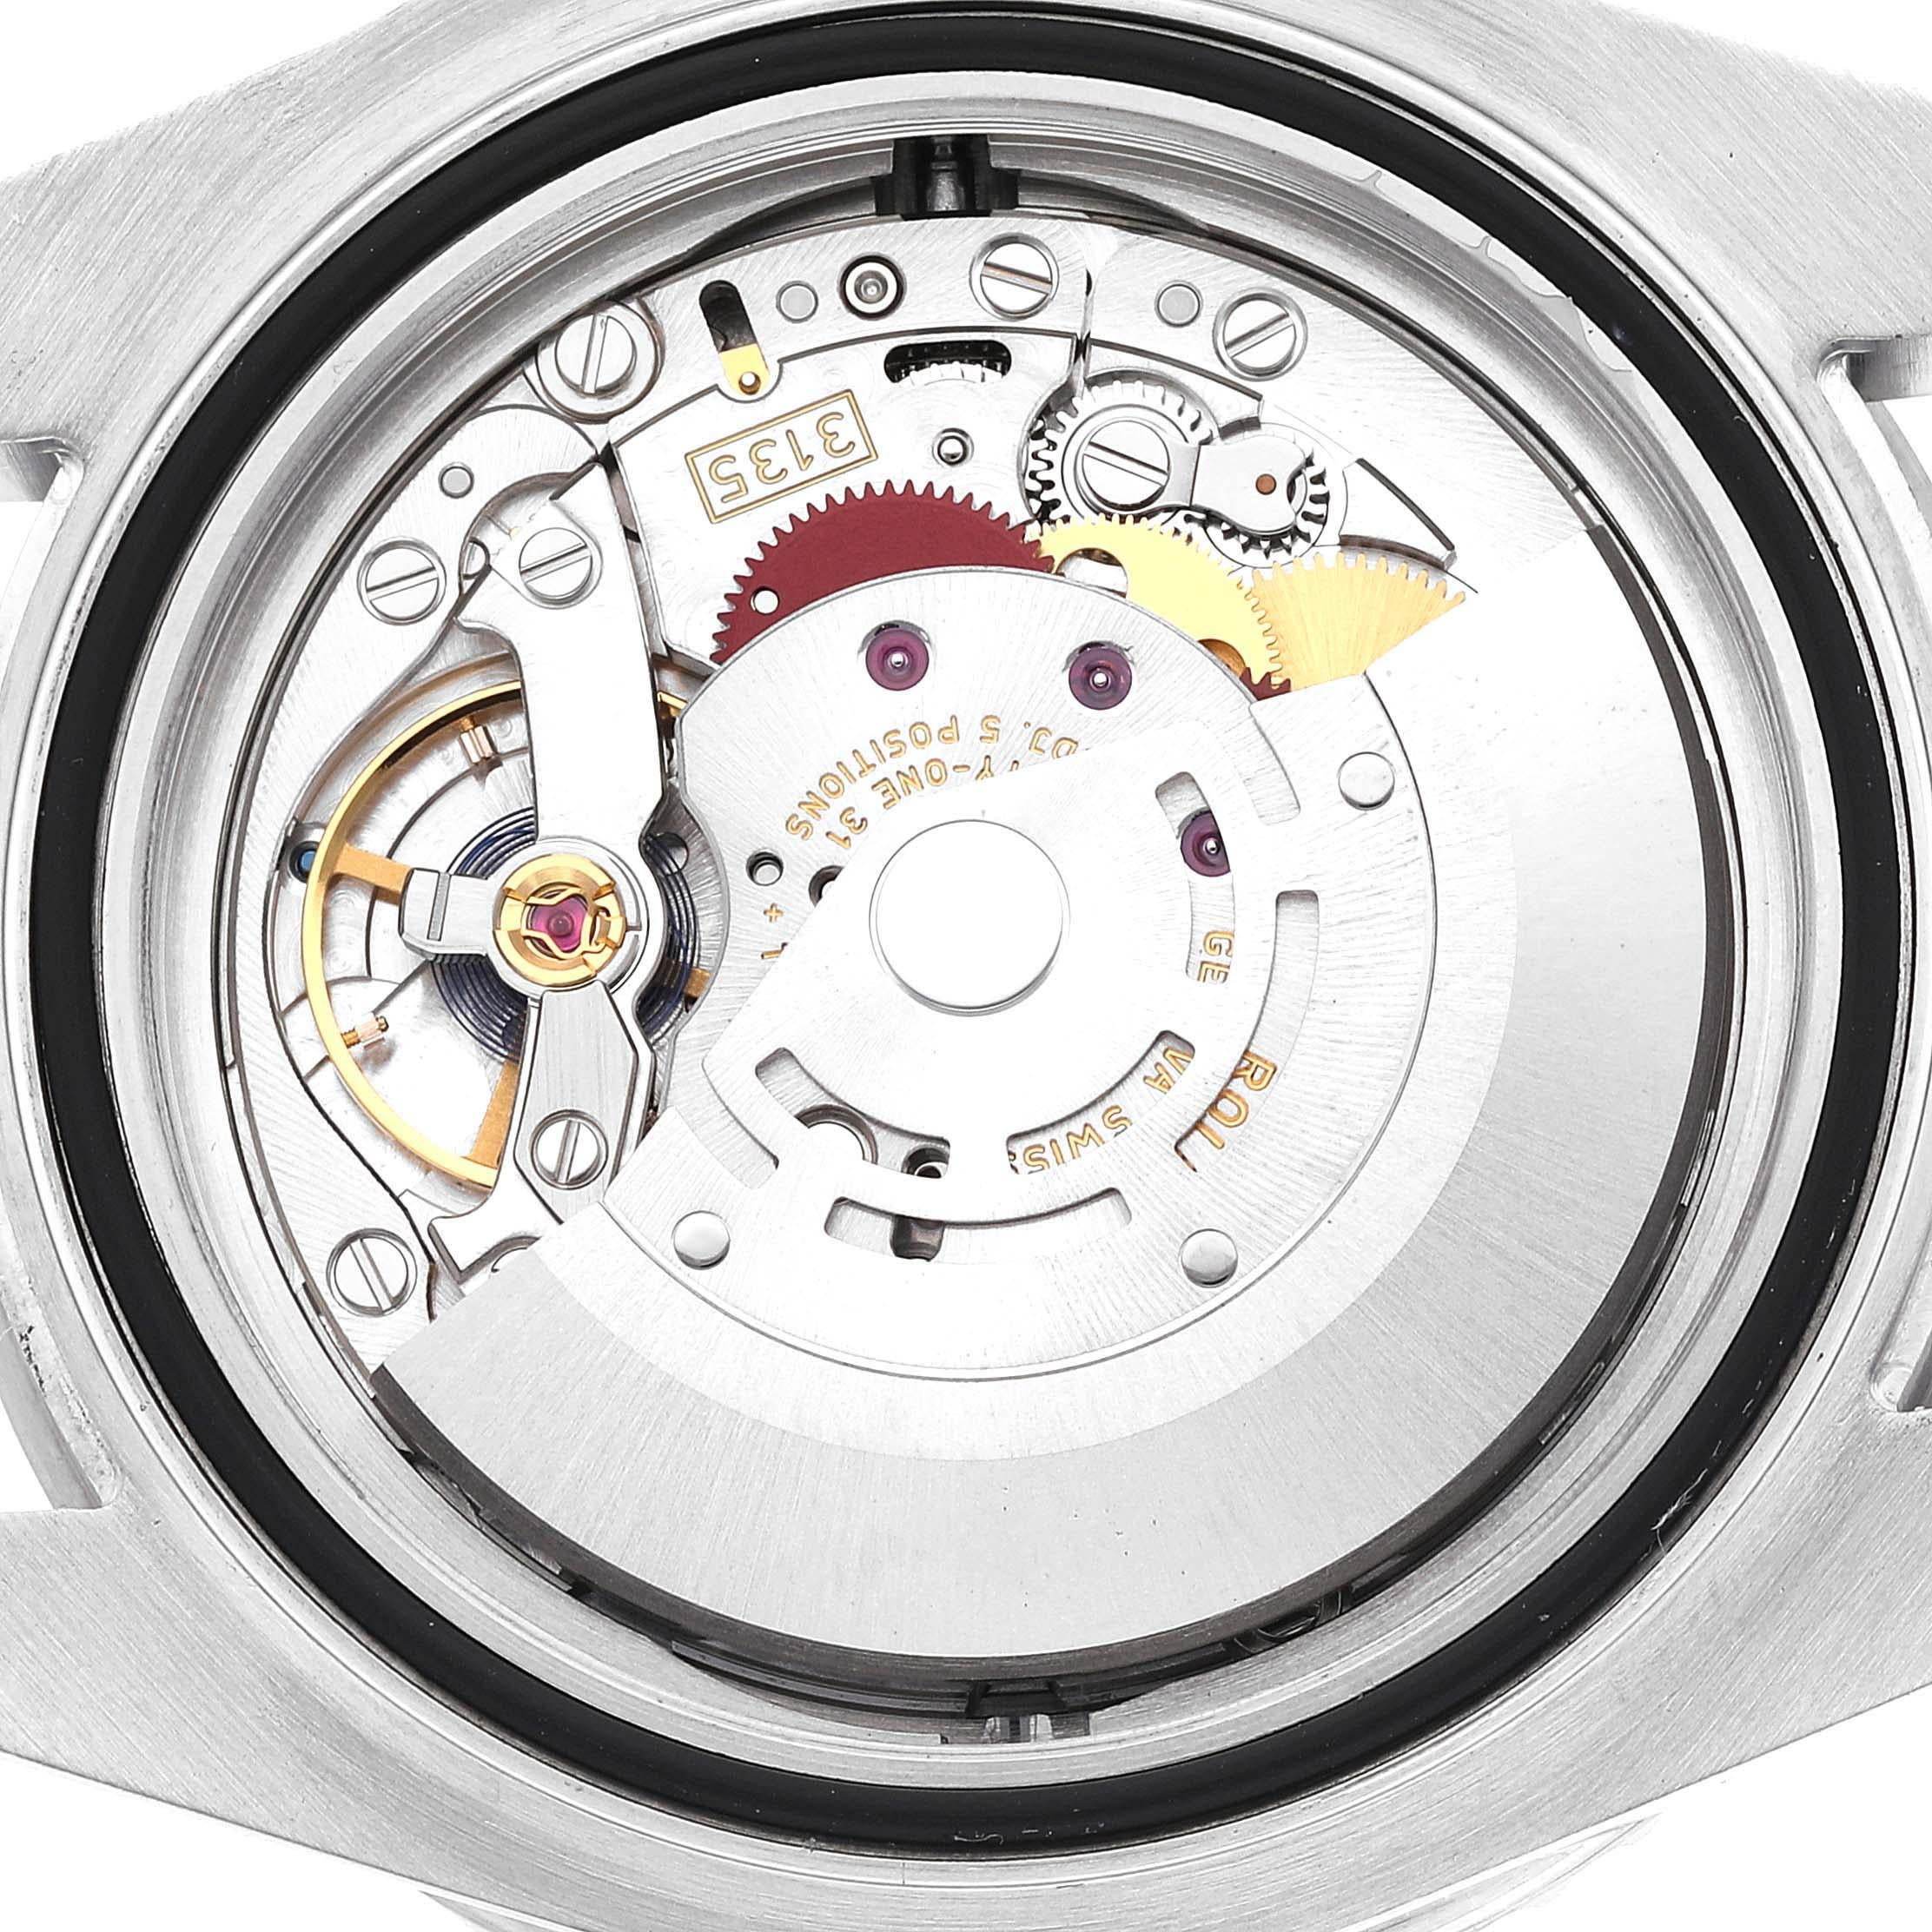 Rolex Seadweller 4000 Automatic Steel Mens Watch 116600 Box Card 4